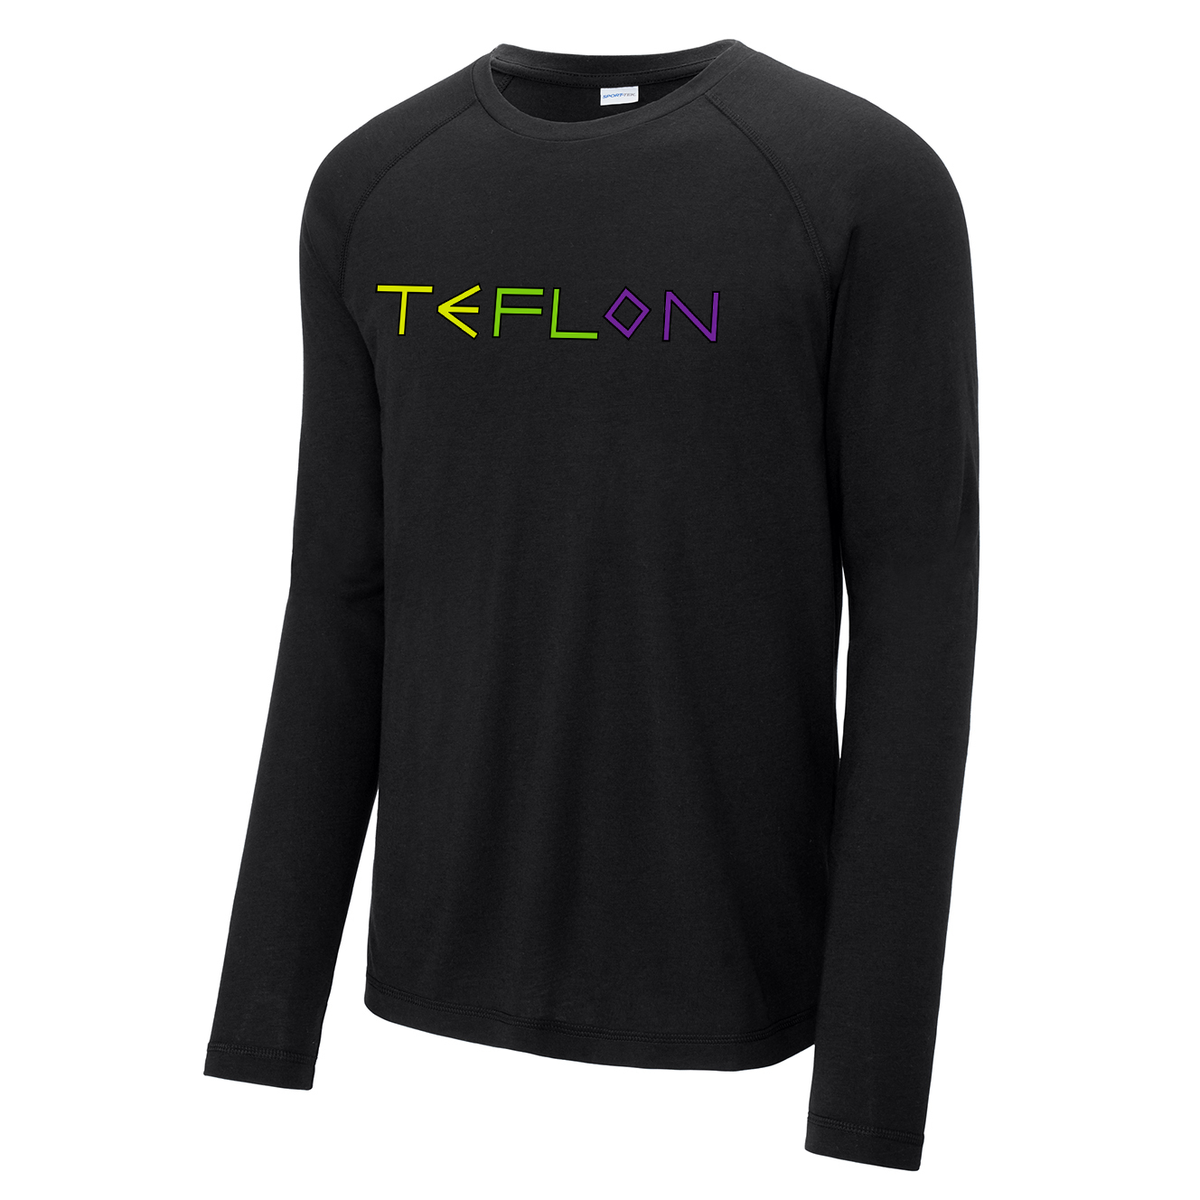 Team Teflon Long Sleeve Raglan CottonTouch